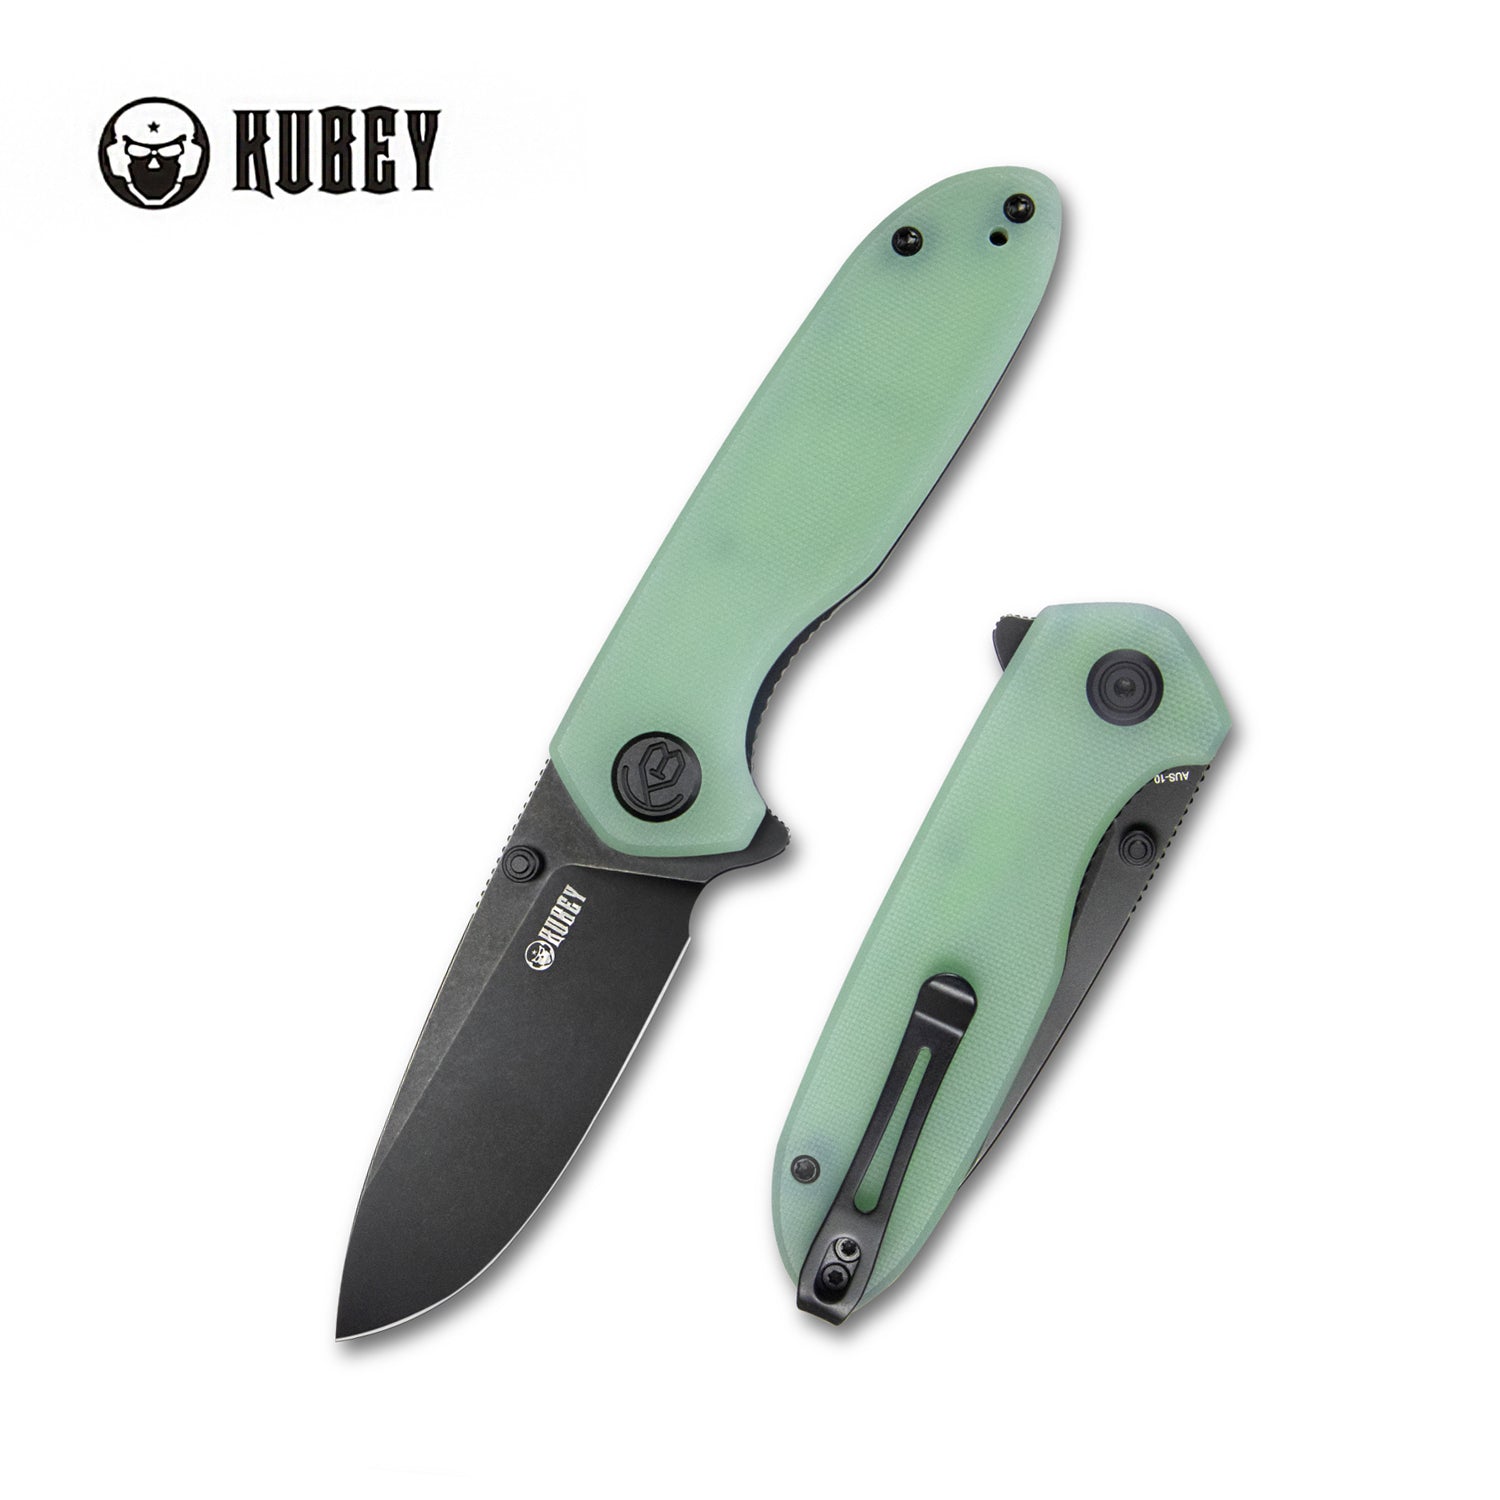 Kubey Belus Thumb Stud Klappmesser Everyday Carry Pocket Knife Jade G10 Handle 2.95" Blackwashed AUS-10 Blade KU342B